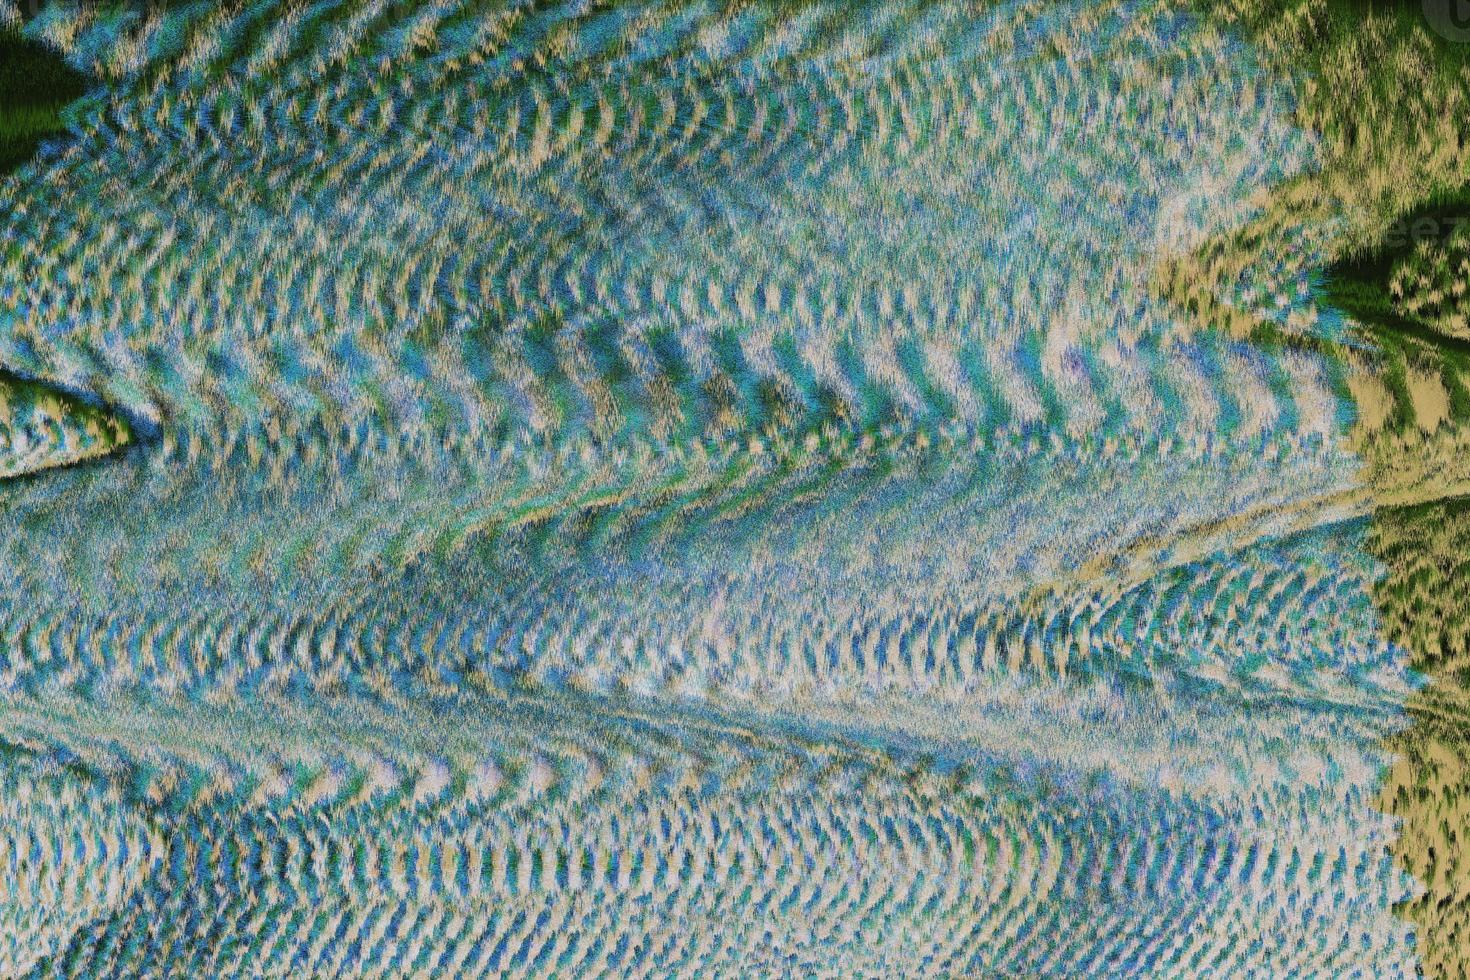 abstracto azul claro único fallo digital manchas holográficas futurista píxel ruido error daño patrón de distorsión en fallo. foto